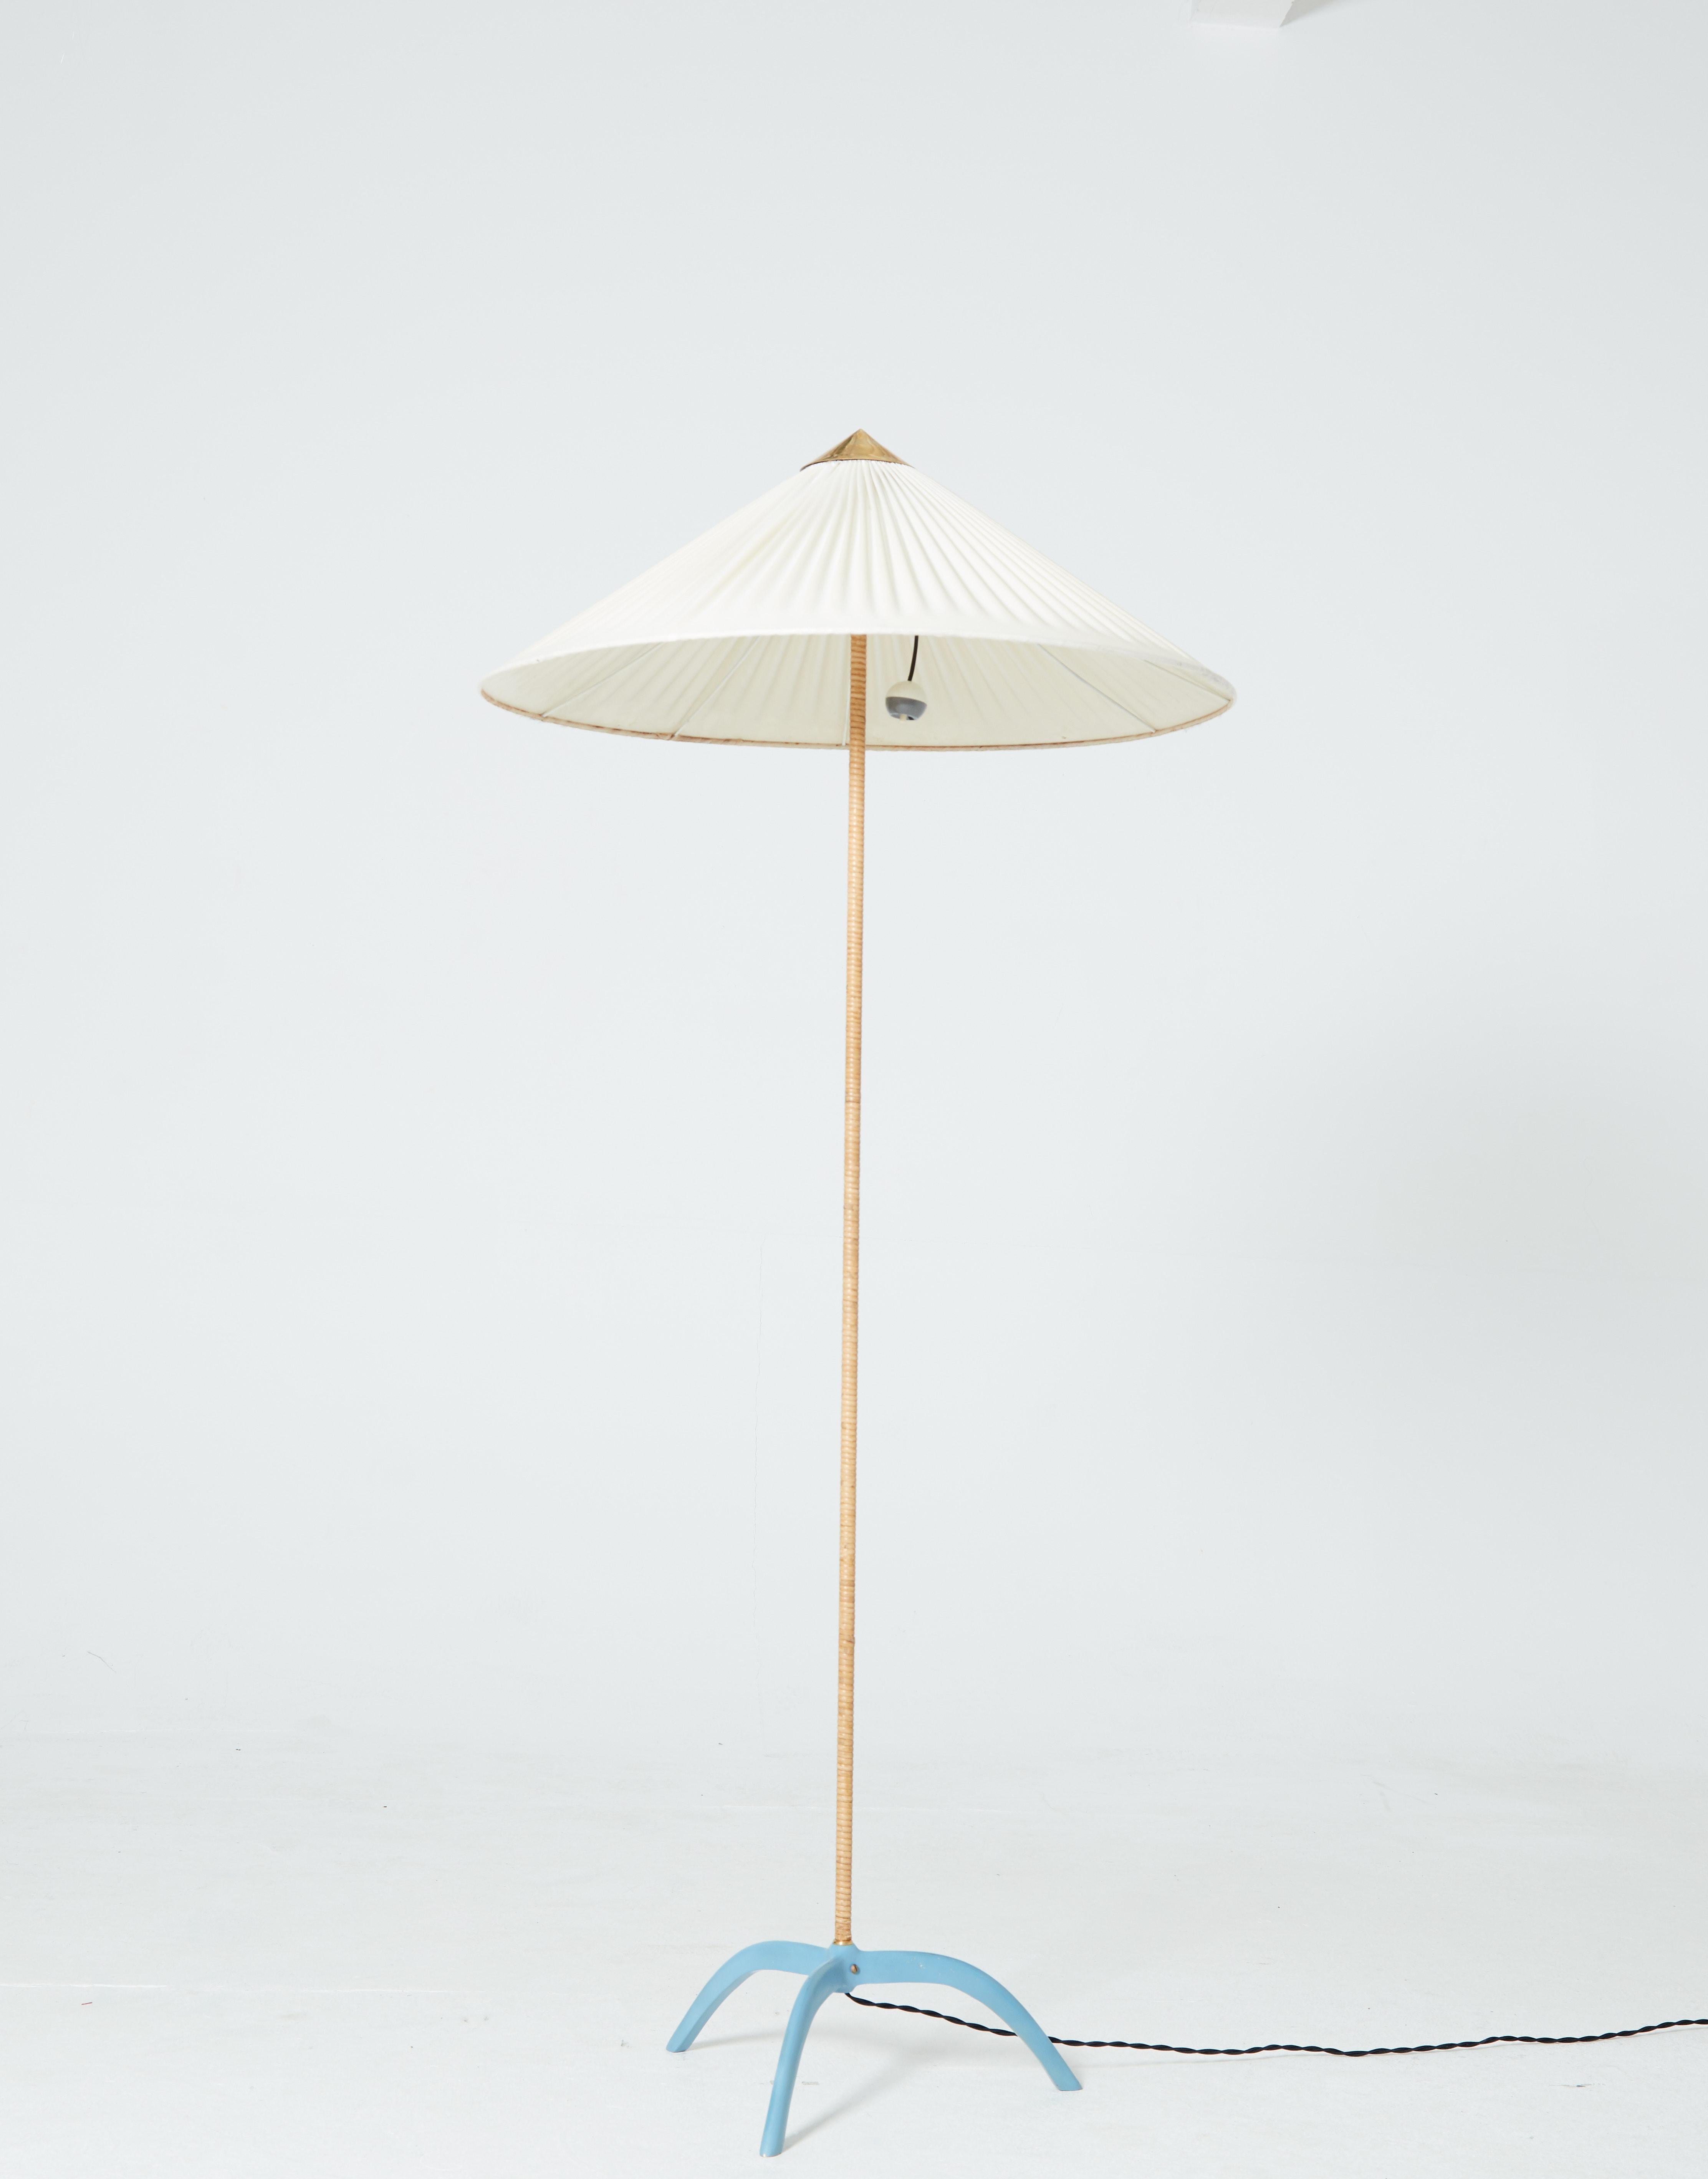 Scandinavian Modern Paavo Tynell Chinese Hat Floor Lamp Model 9615, Taito Oy, 1940s, Finland